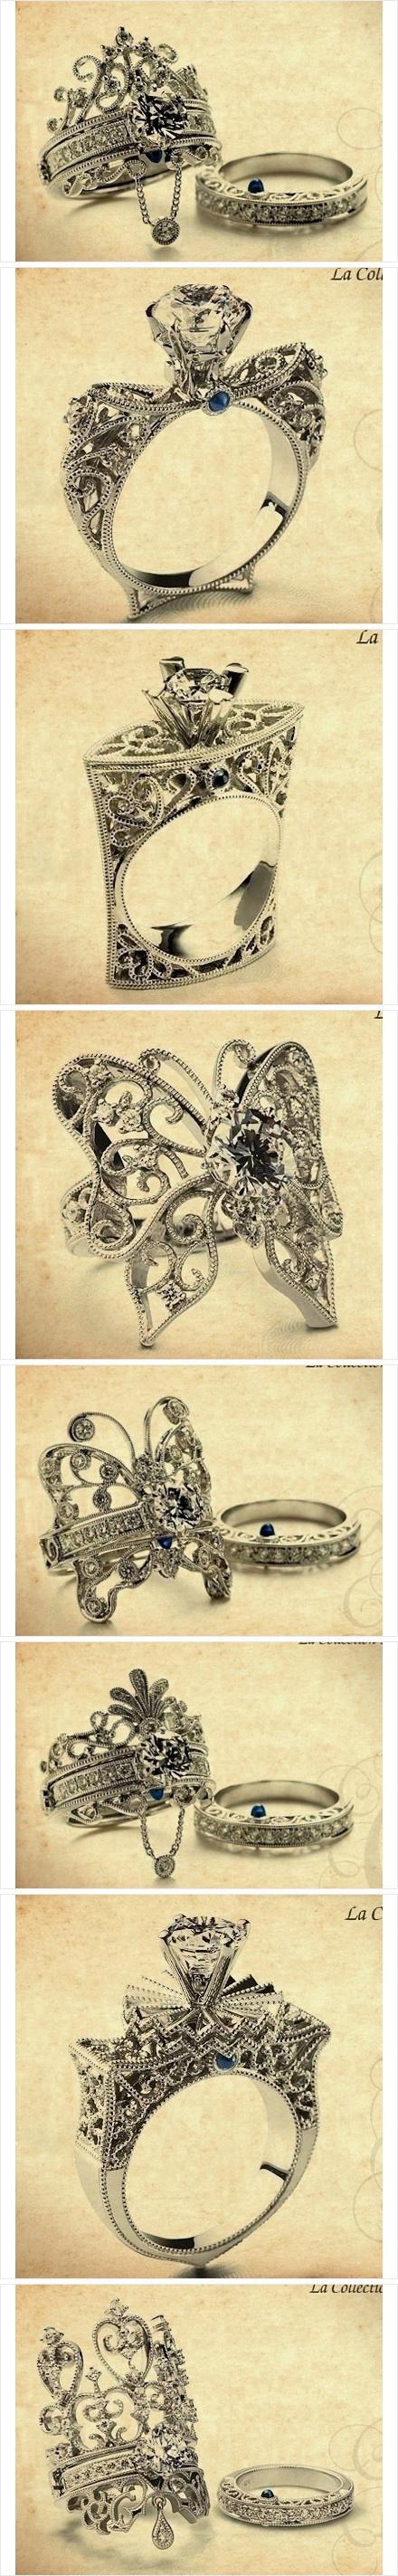 Wedding - Jewellery